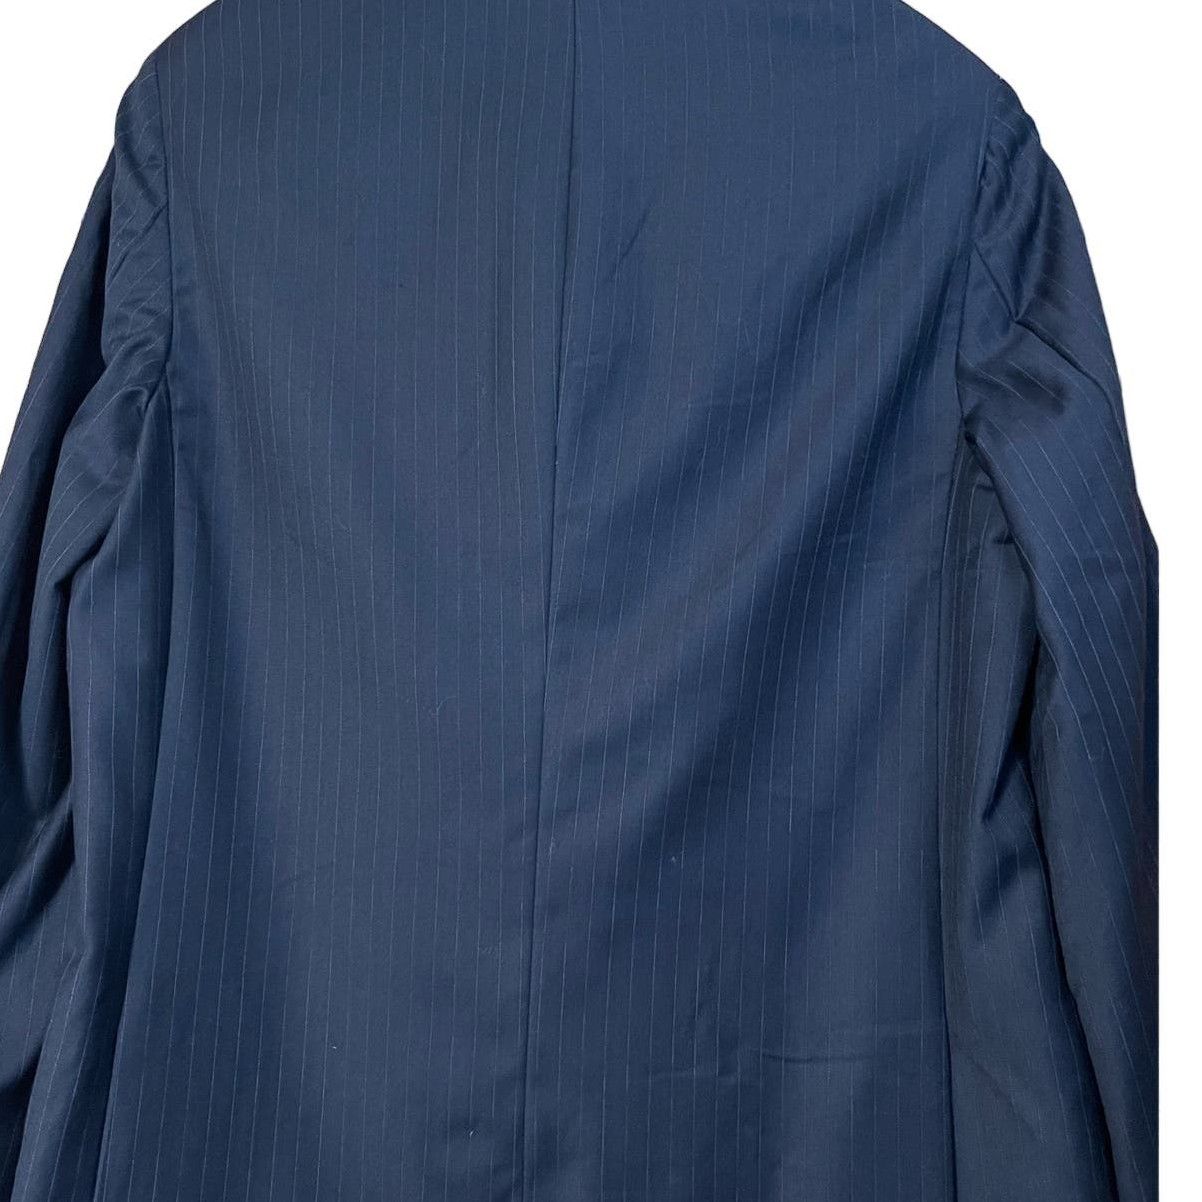 Hickey Freeman Hickey Freeman Mens Blue Pinstripe Sports Jacket Blazer 42R Size 42R - 10 Preview